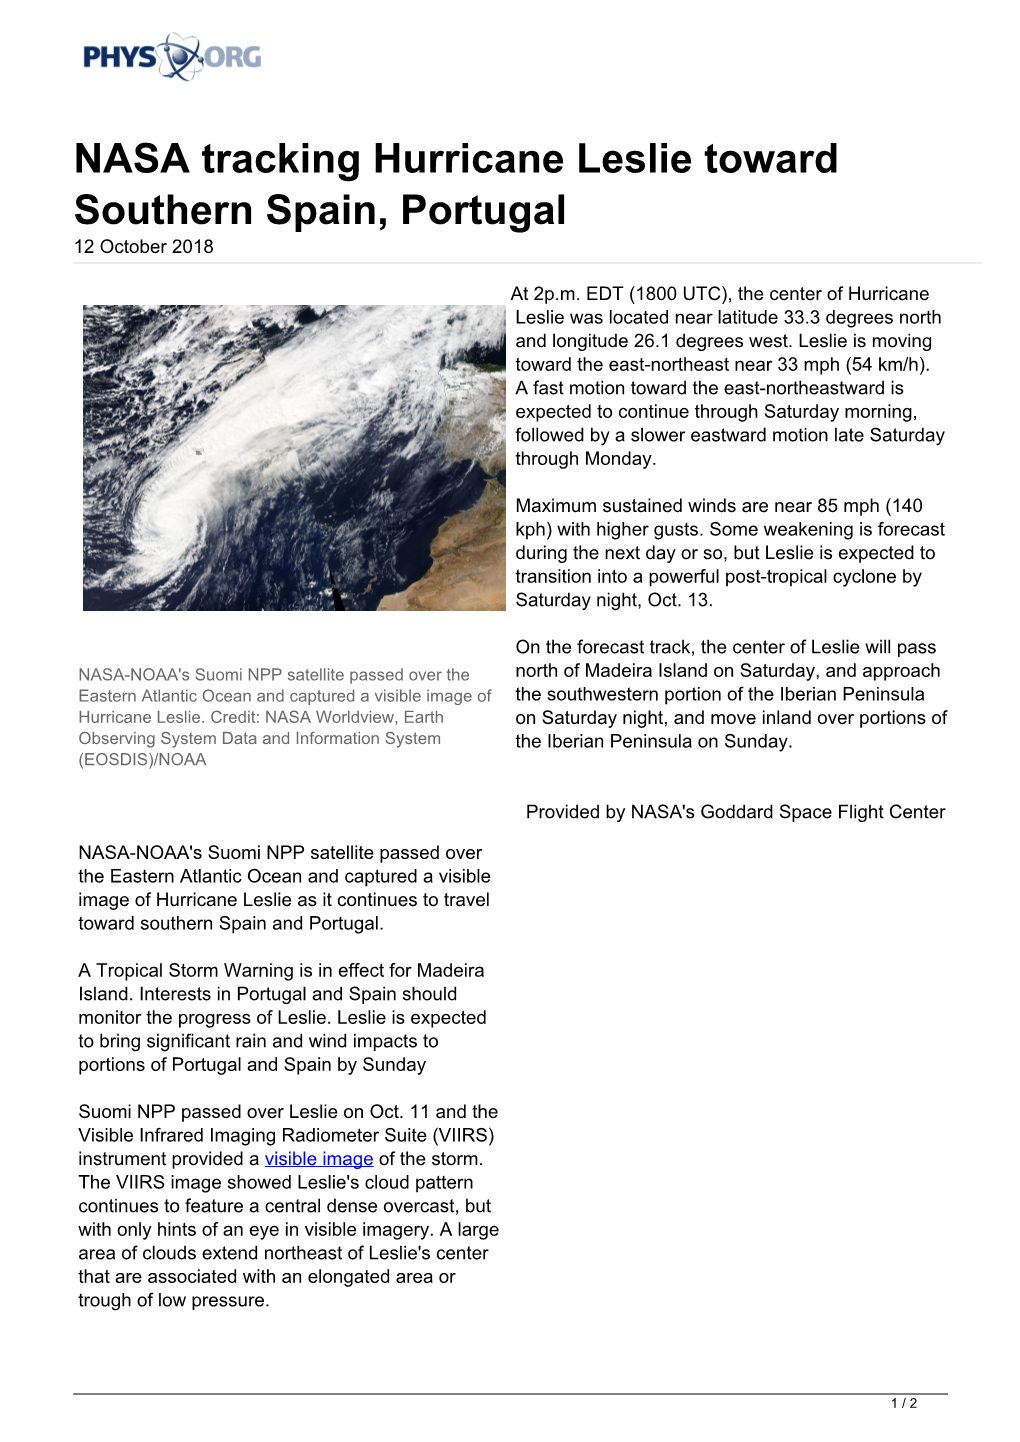 NASA Tracking Hurricane Leslie Toward Southern Spain, Portugal 12 October 2018